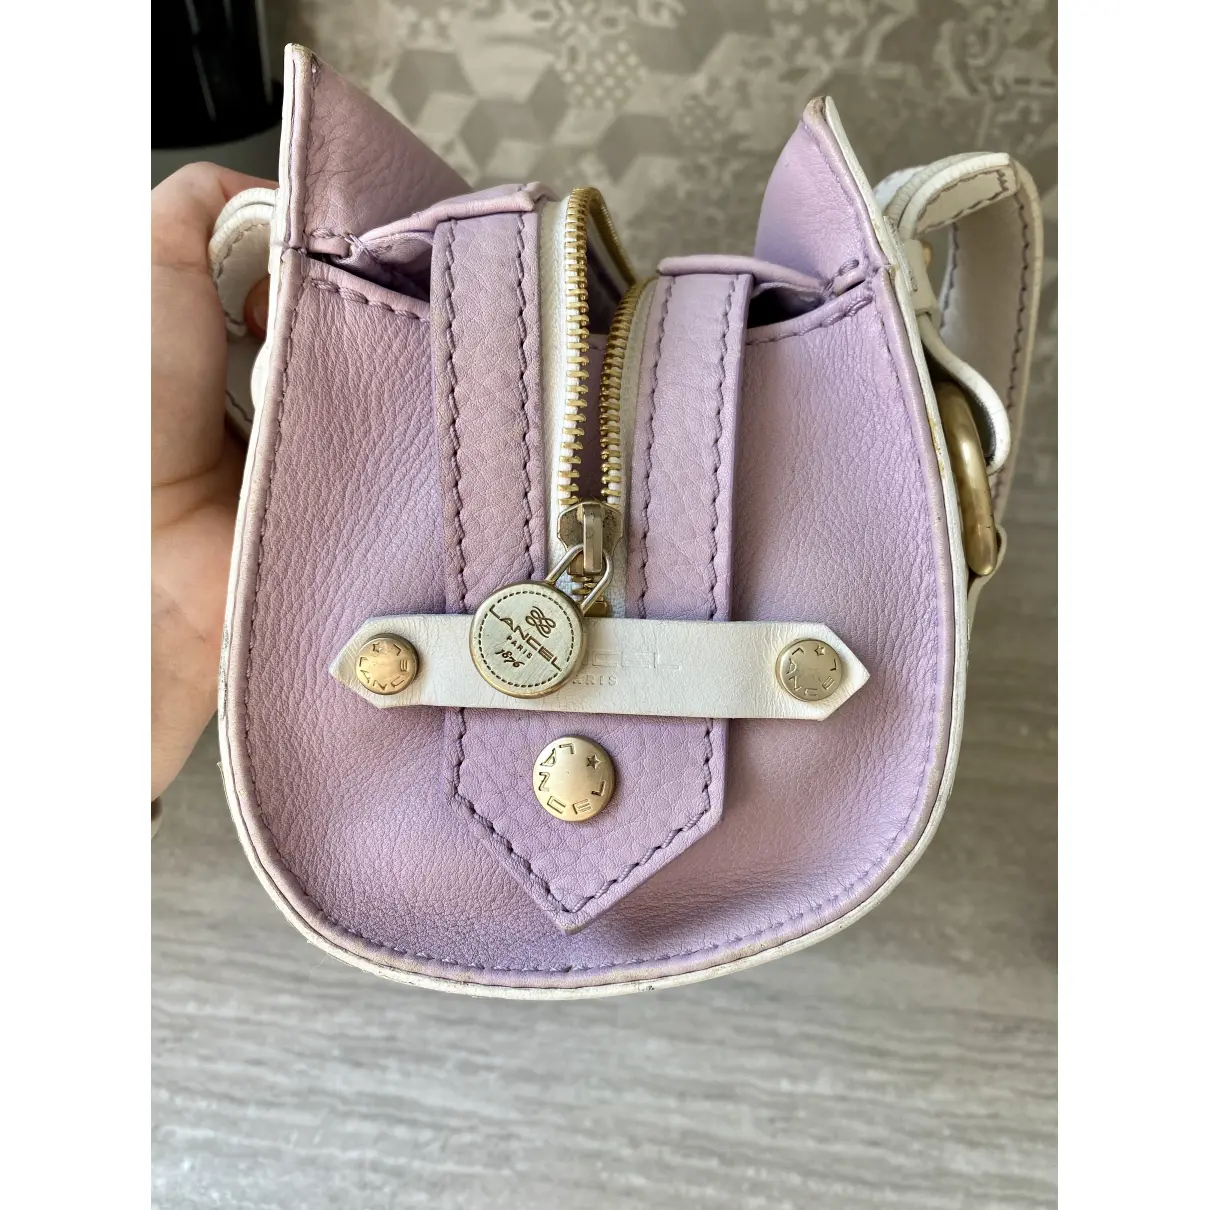 Buy Lancel Leather handbag online